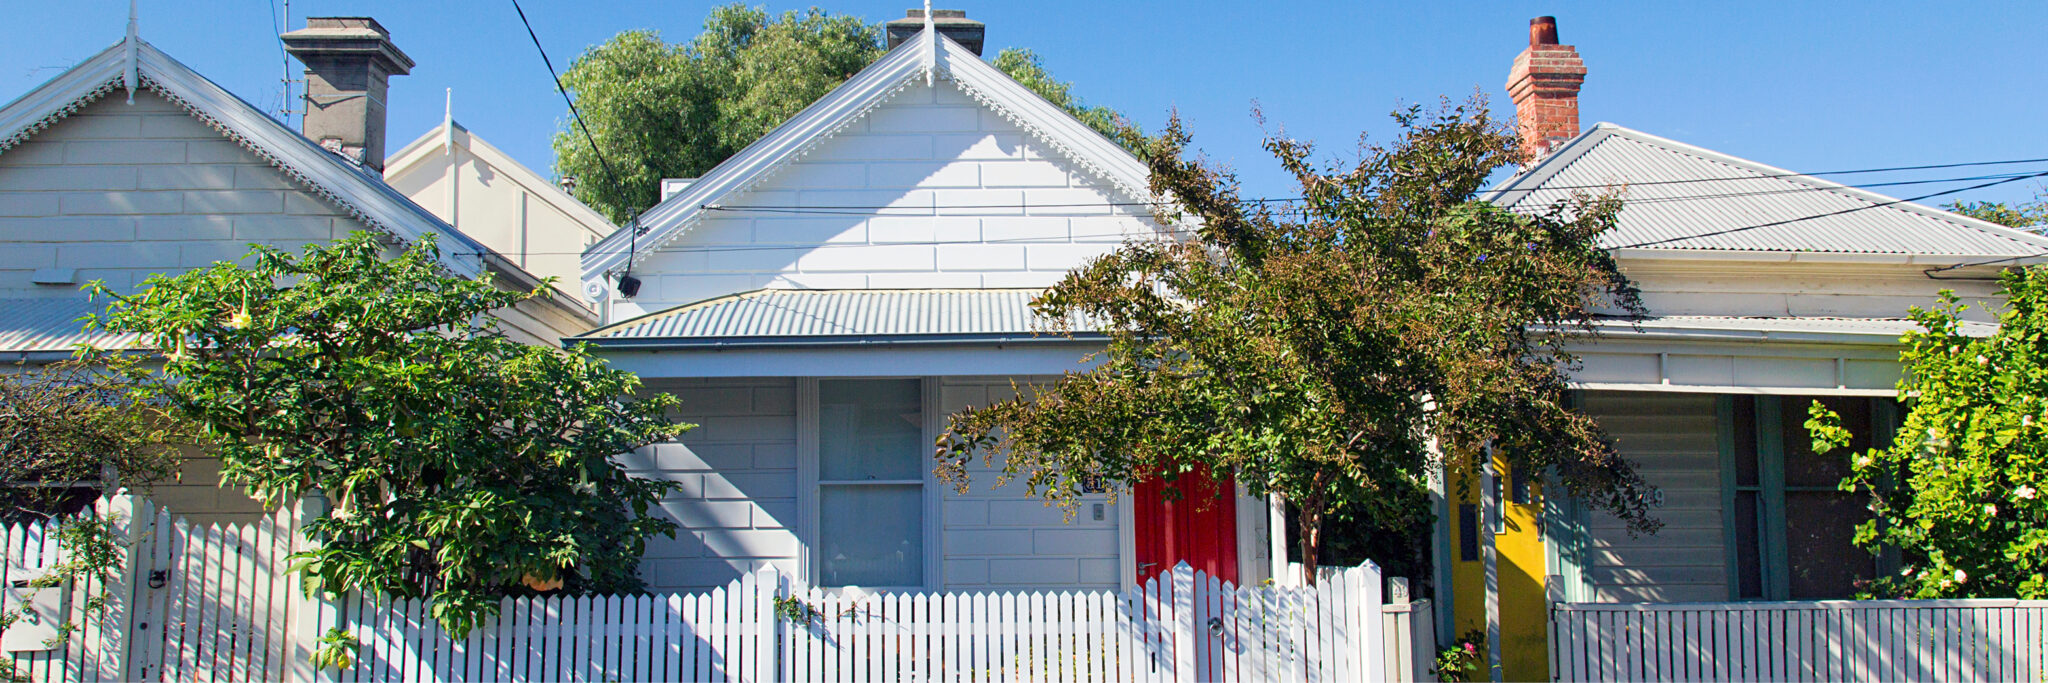 3 Middle Class Homes in St Kilda Melbourne Australia